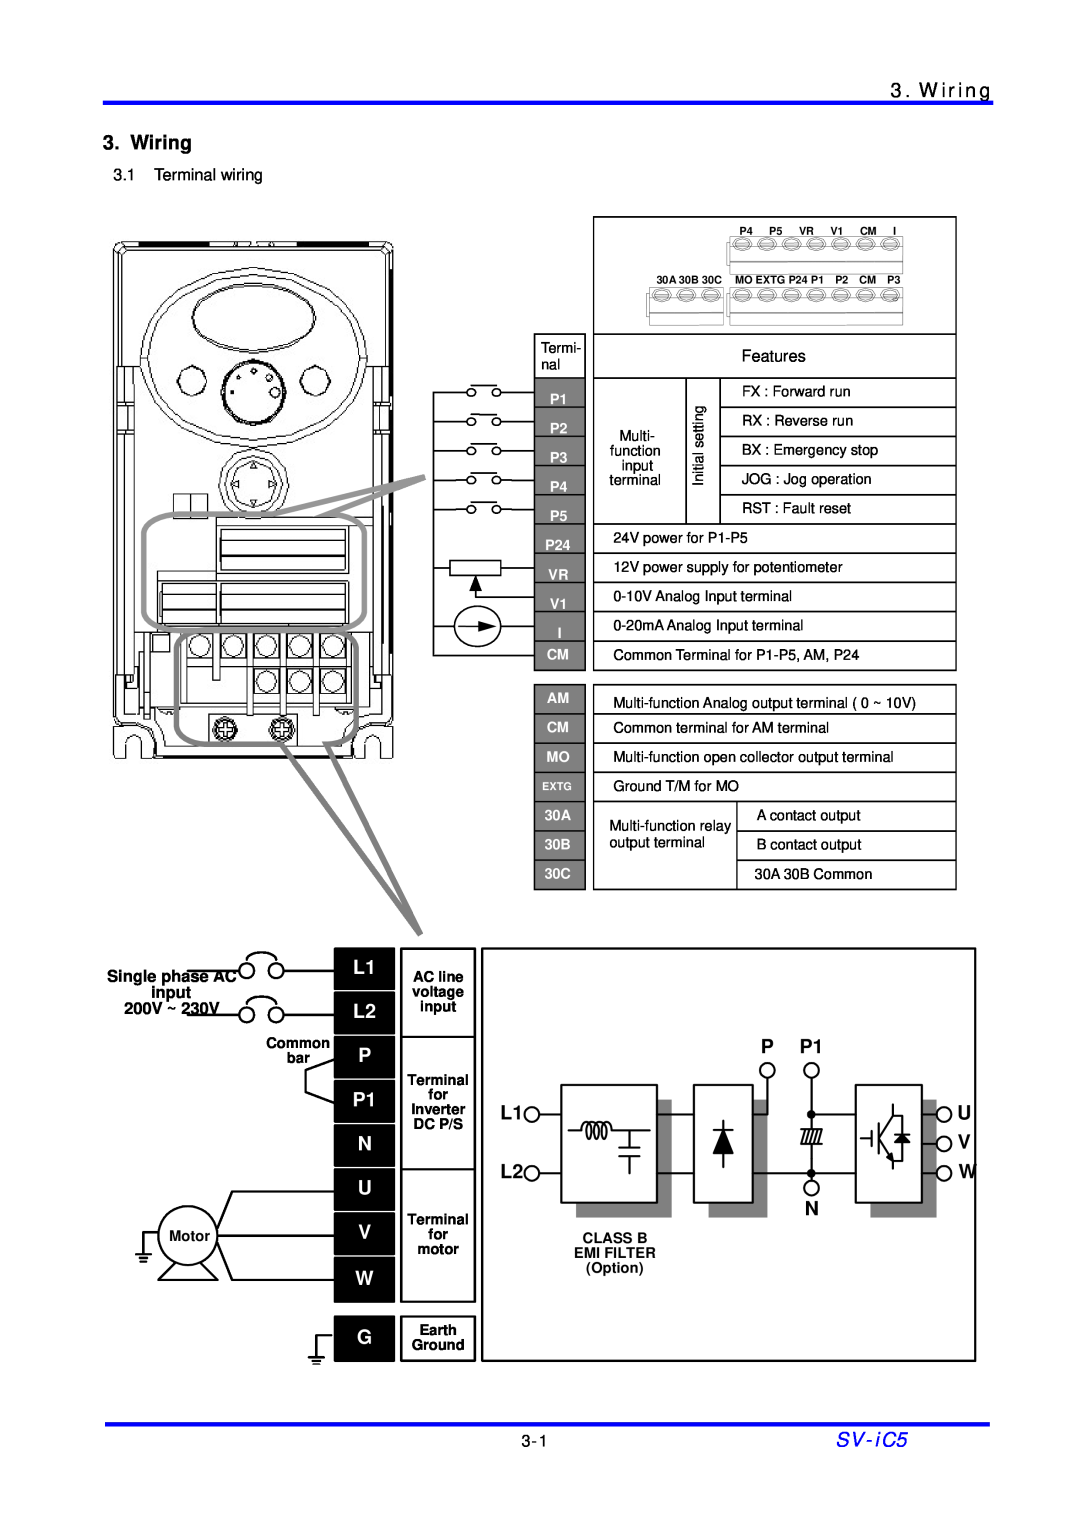 LG Electronics SV-iC5 Series manual Wiring, L1 L2, P P1 N, Single phase AC input 200V ~, Common bar Motor, Earth Ground 